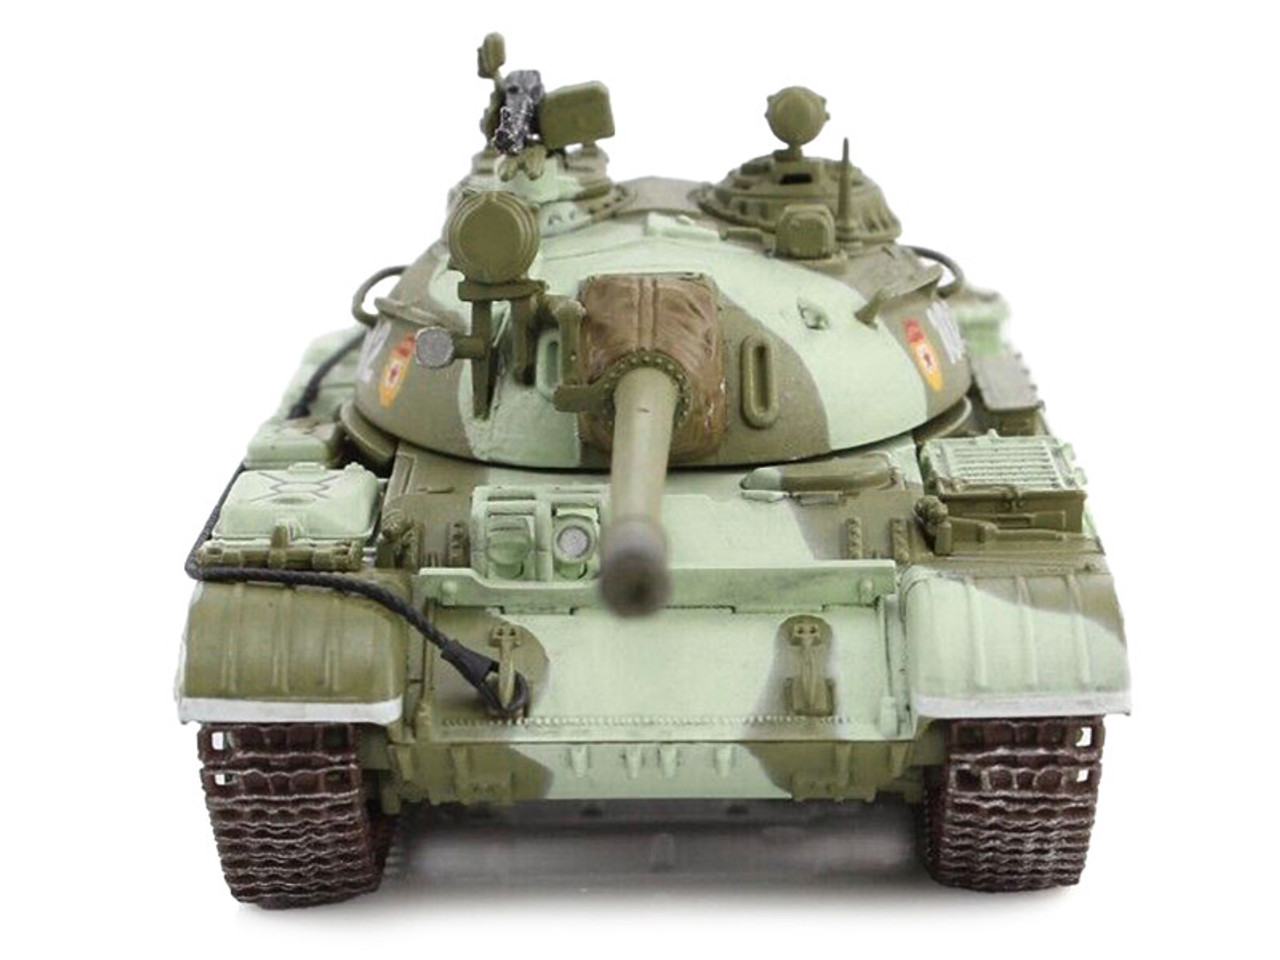 KhPZ T-54B Medium Tank #102 "Parade of the Guard Units" Soviet Army 1/72 Diecast Model by Hobby Master